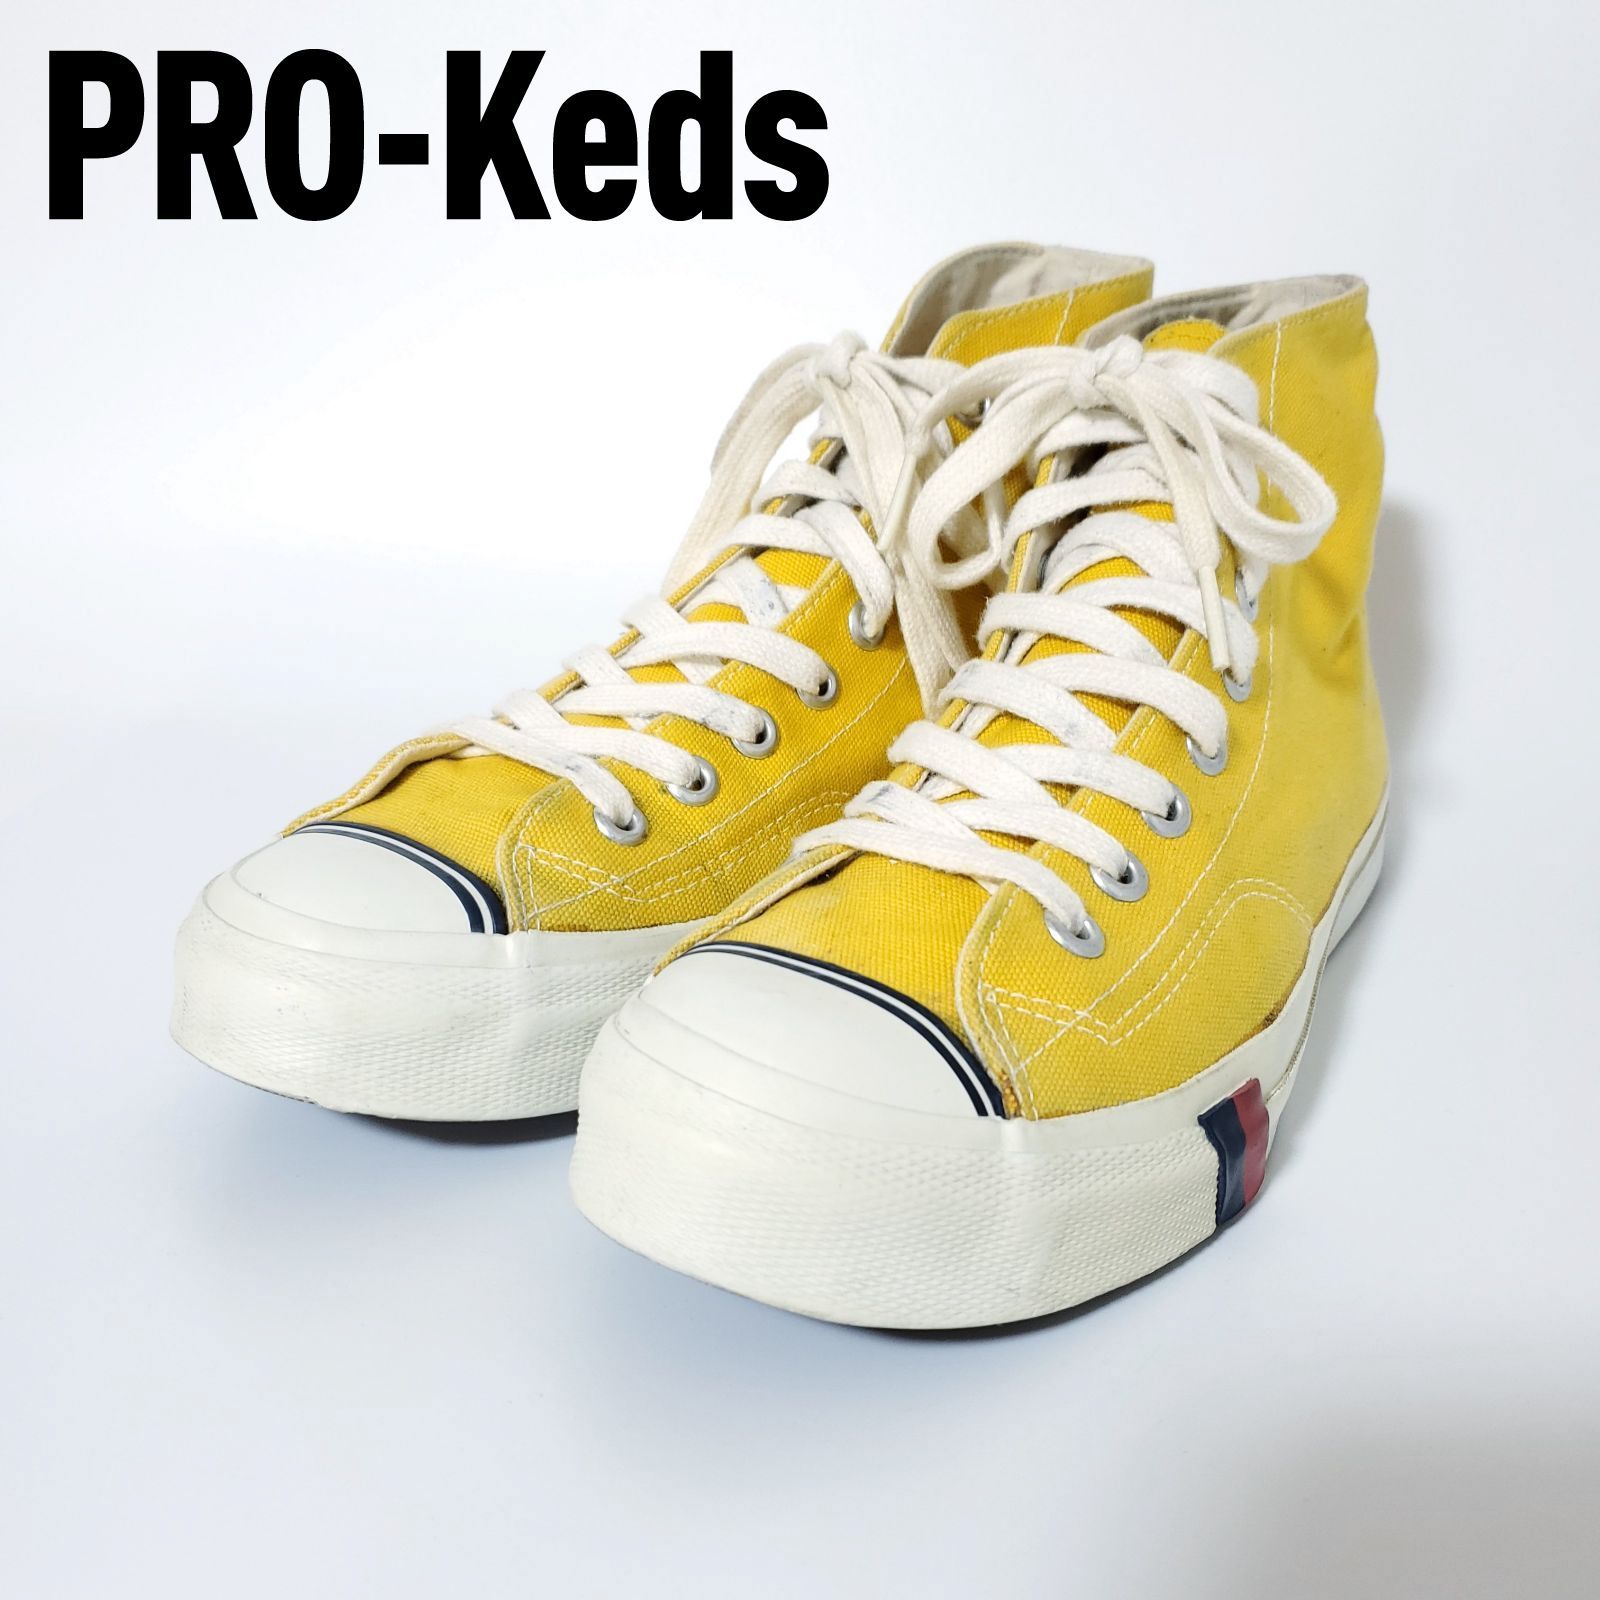 PRO-Keds スニーカー - 靴